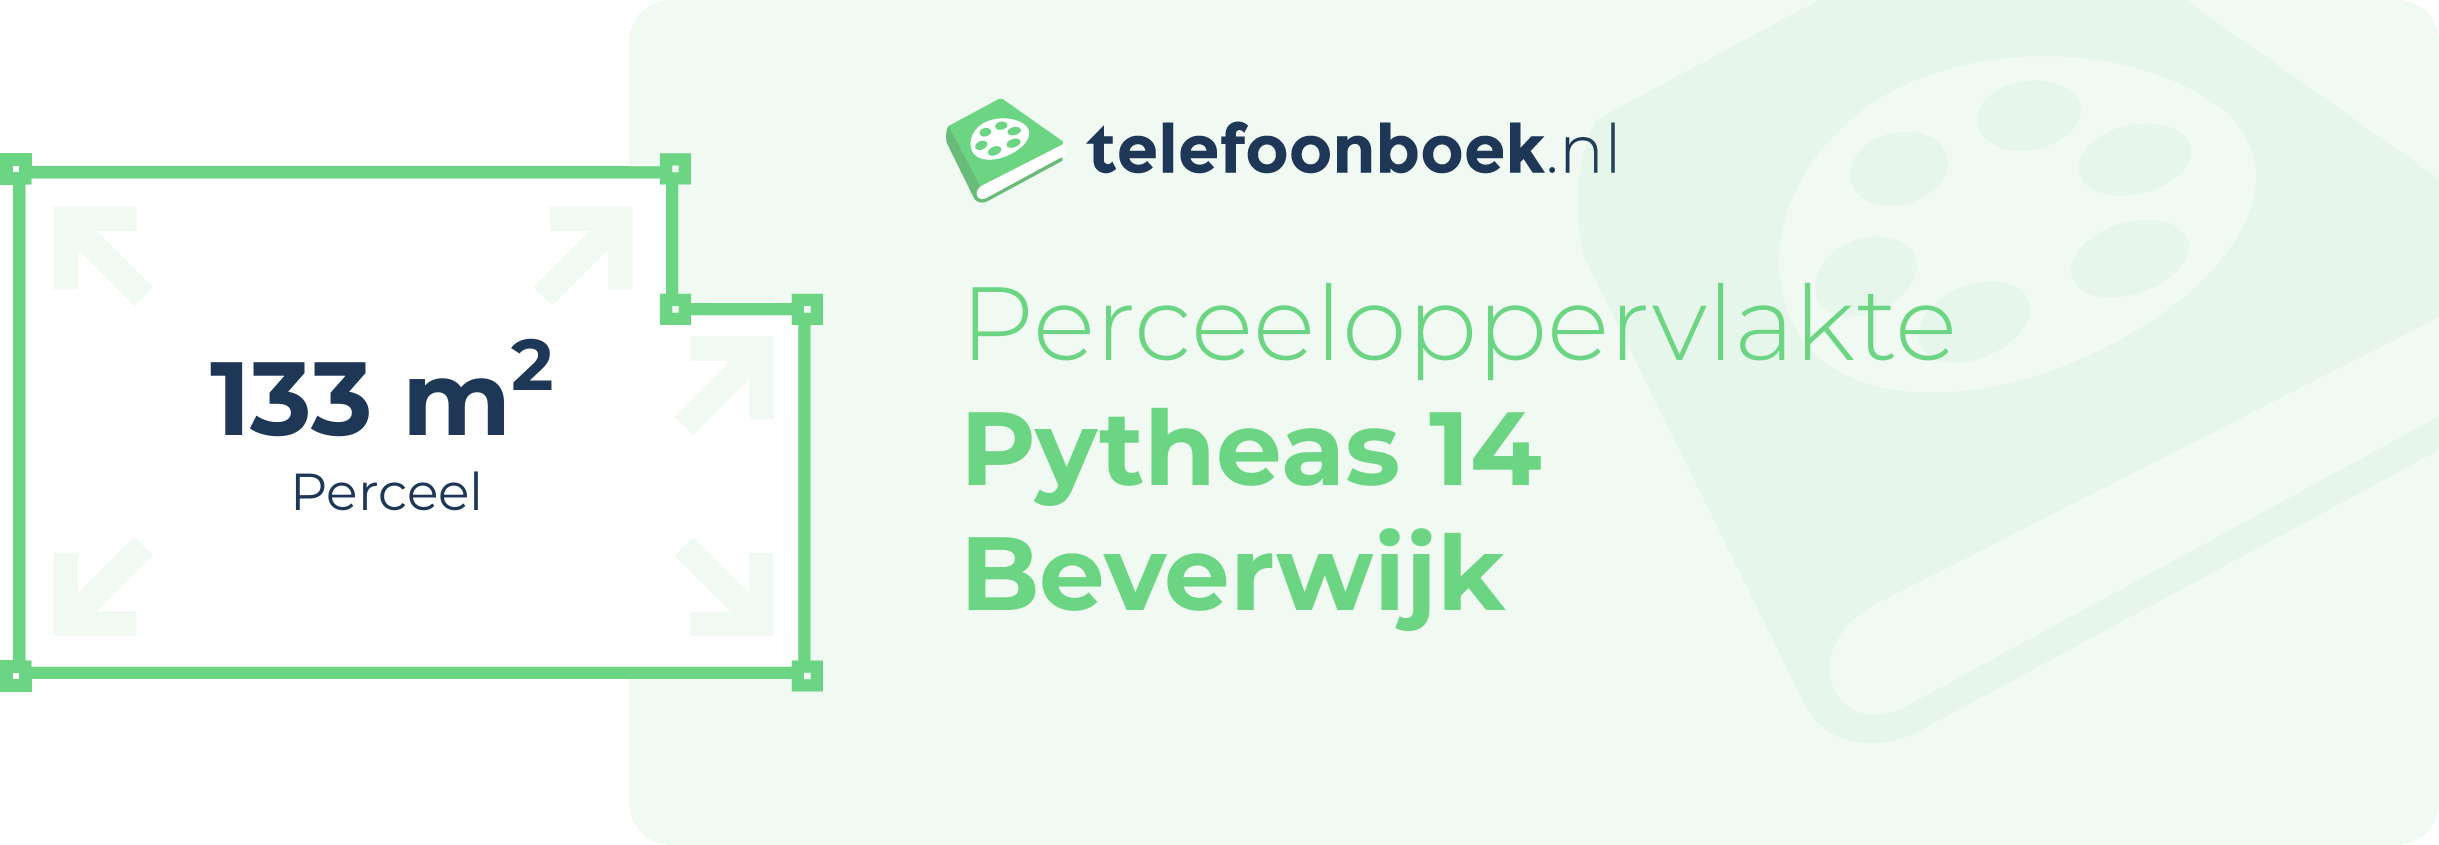 Perceeloppervlakte Pytheas 14 Beverwijk